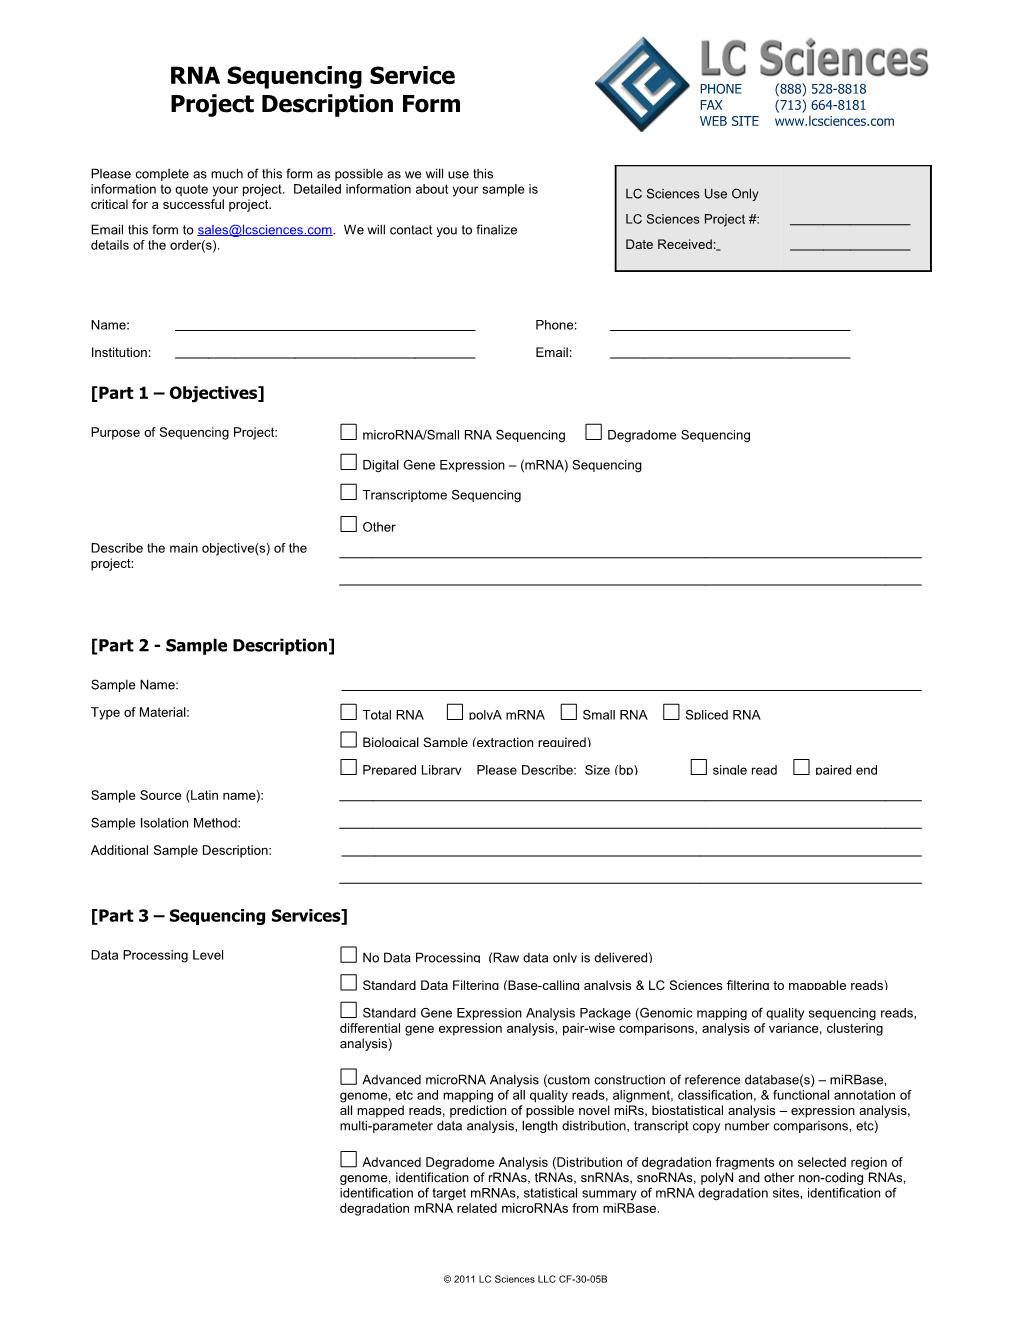 LC Sciences - DNA/RNA Aptamer Microarray Service Project Description Form